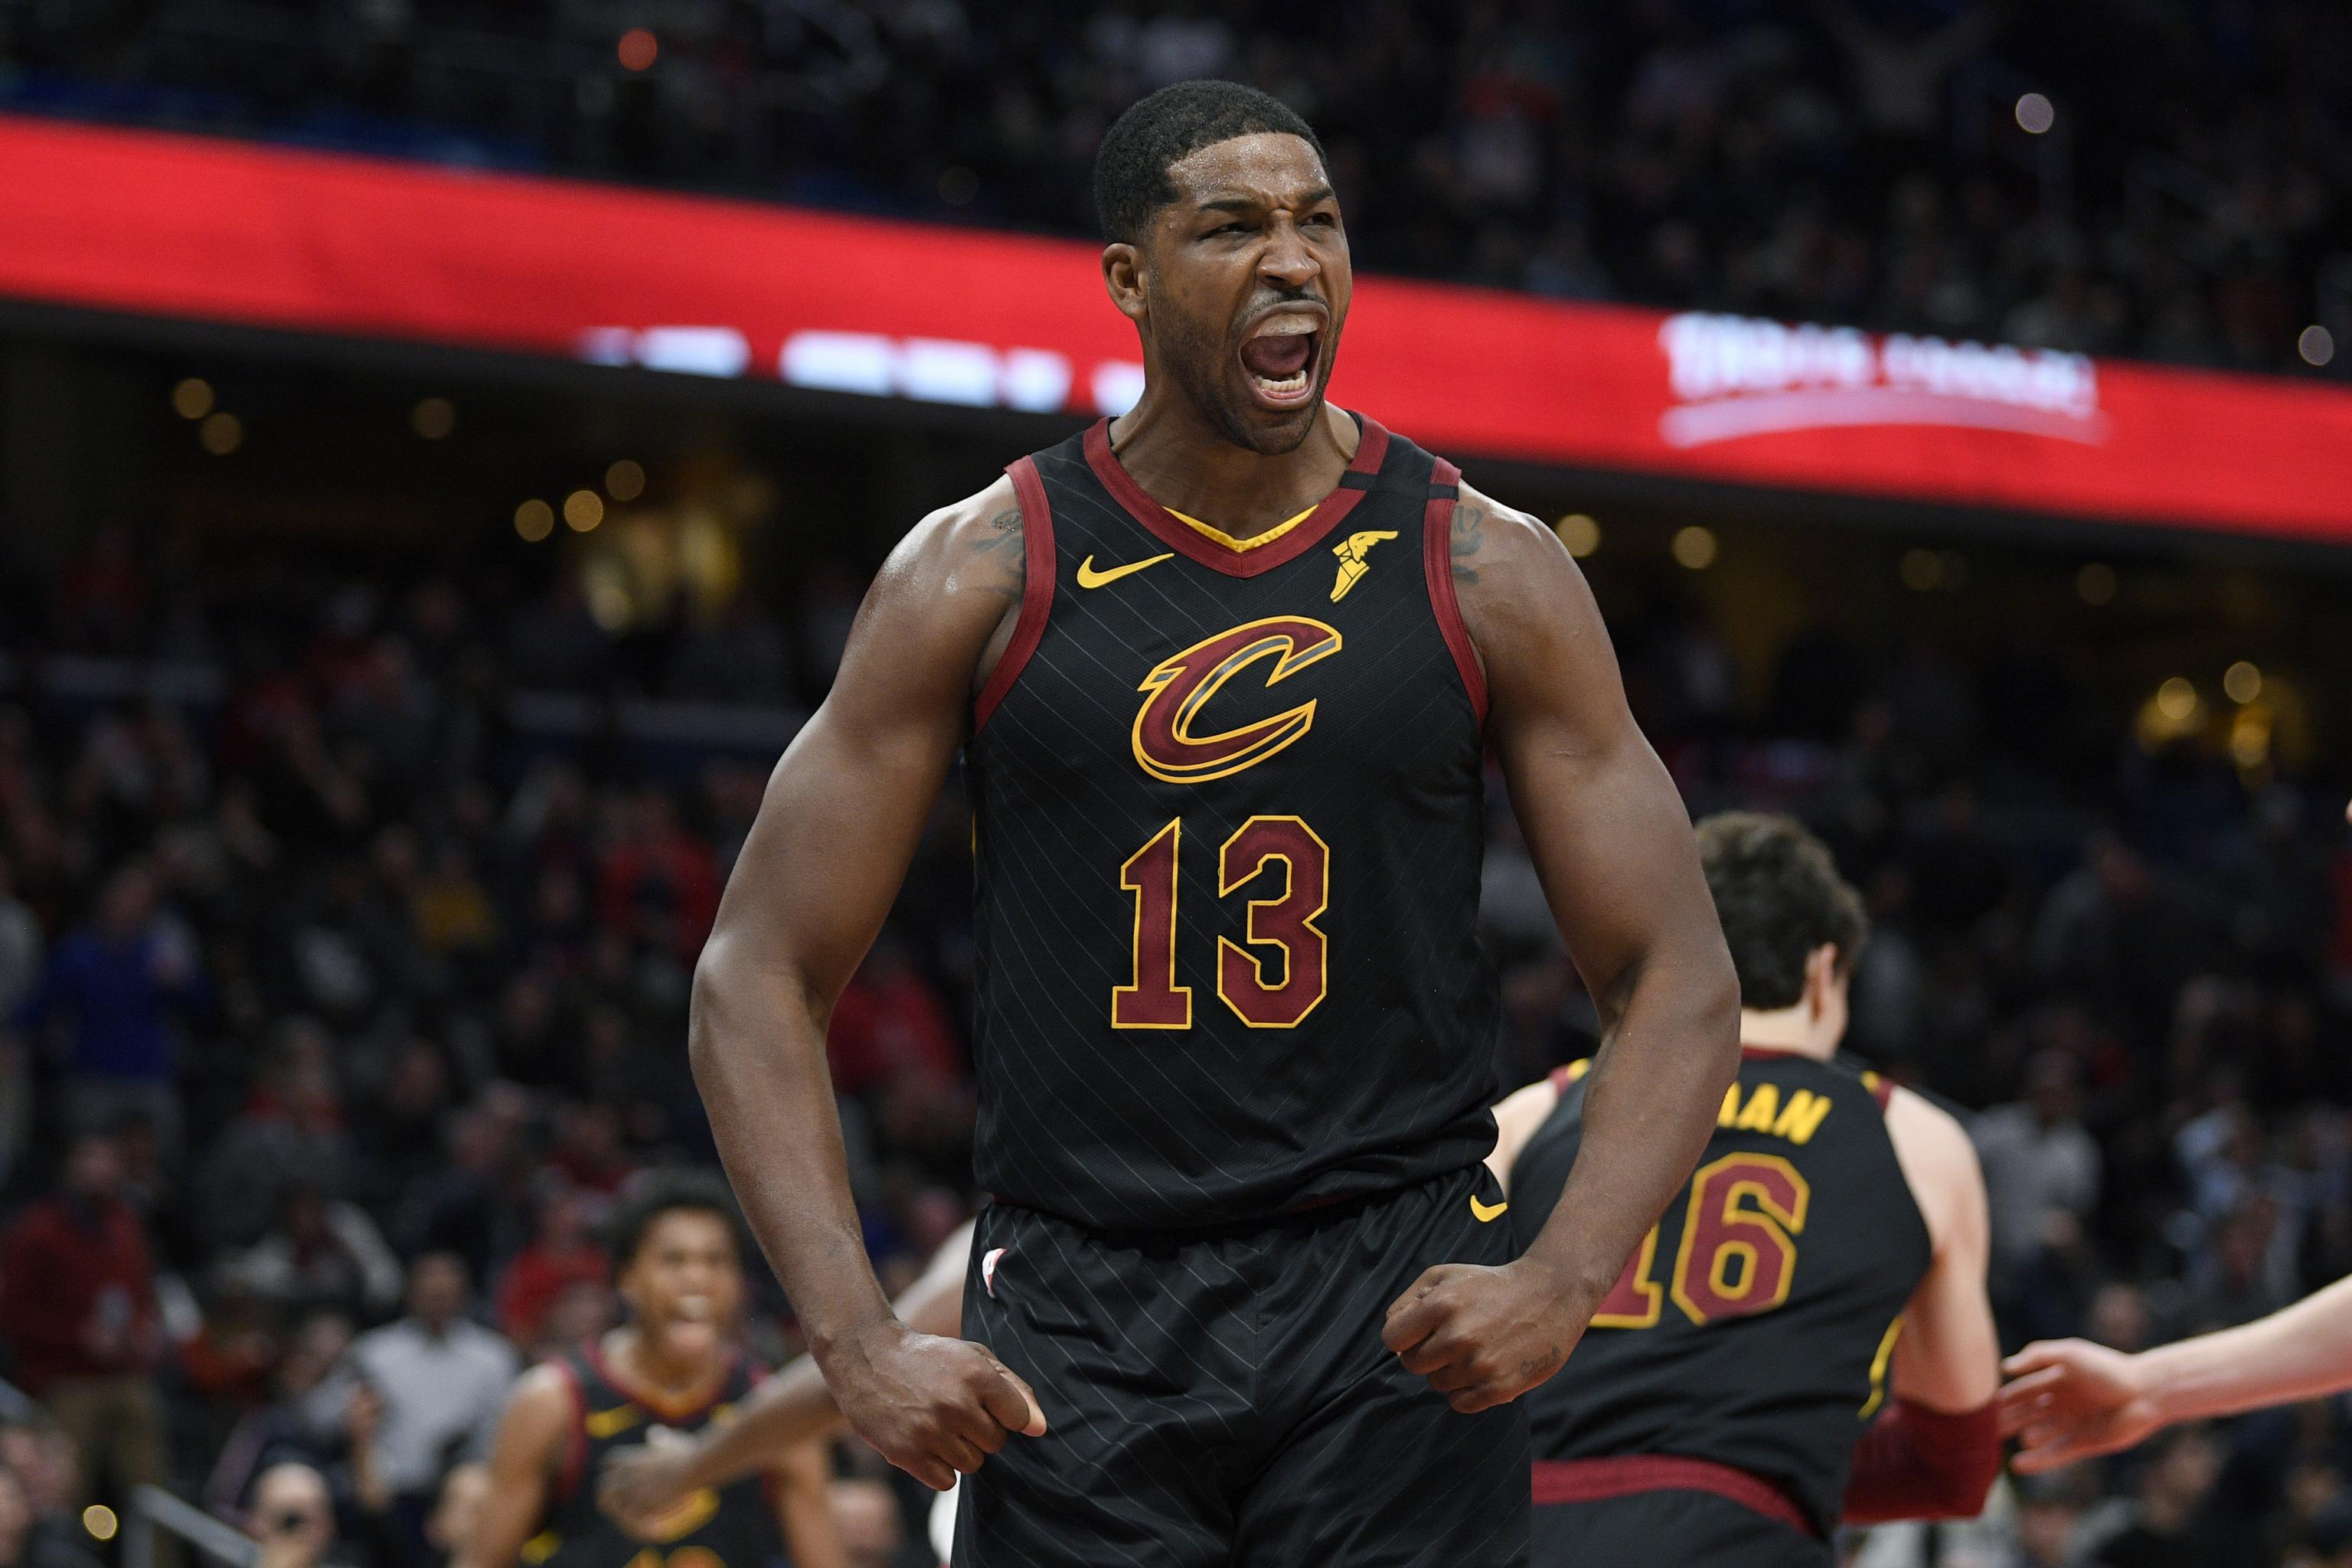 Cleveland Cavaliers: Breaking News, Rumors & Highlights